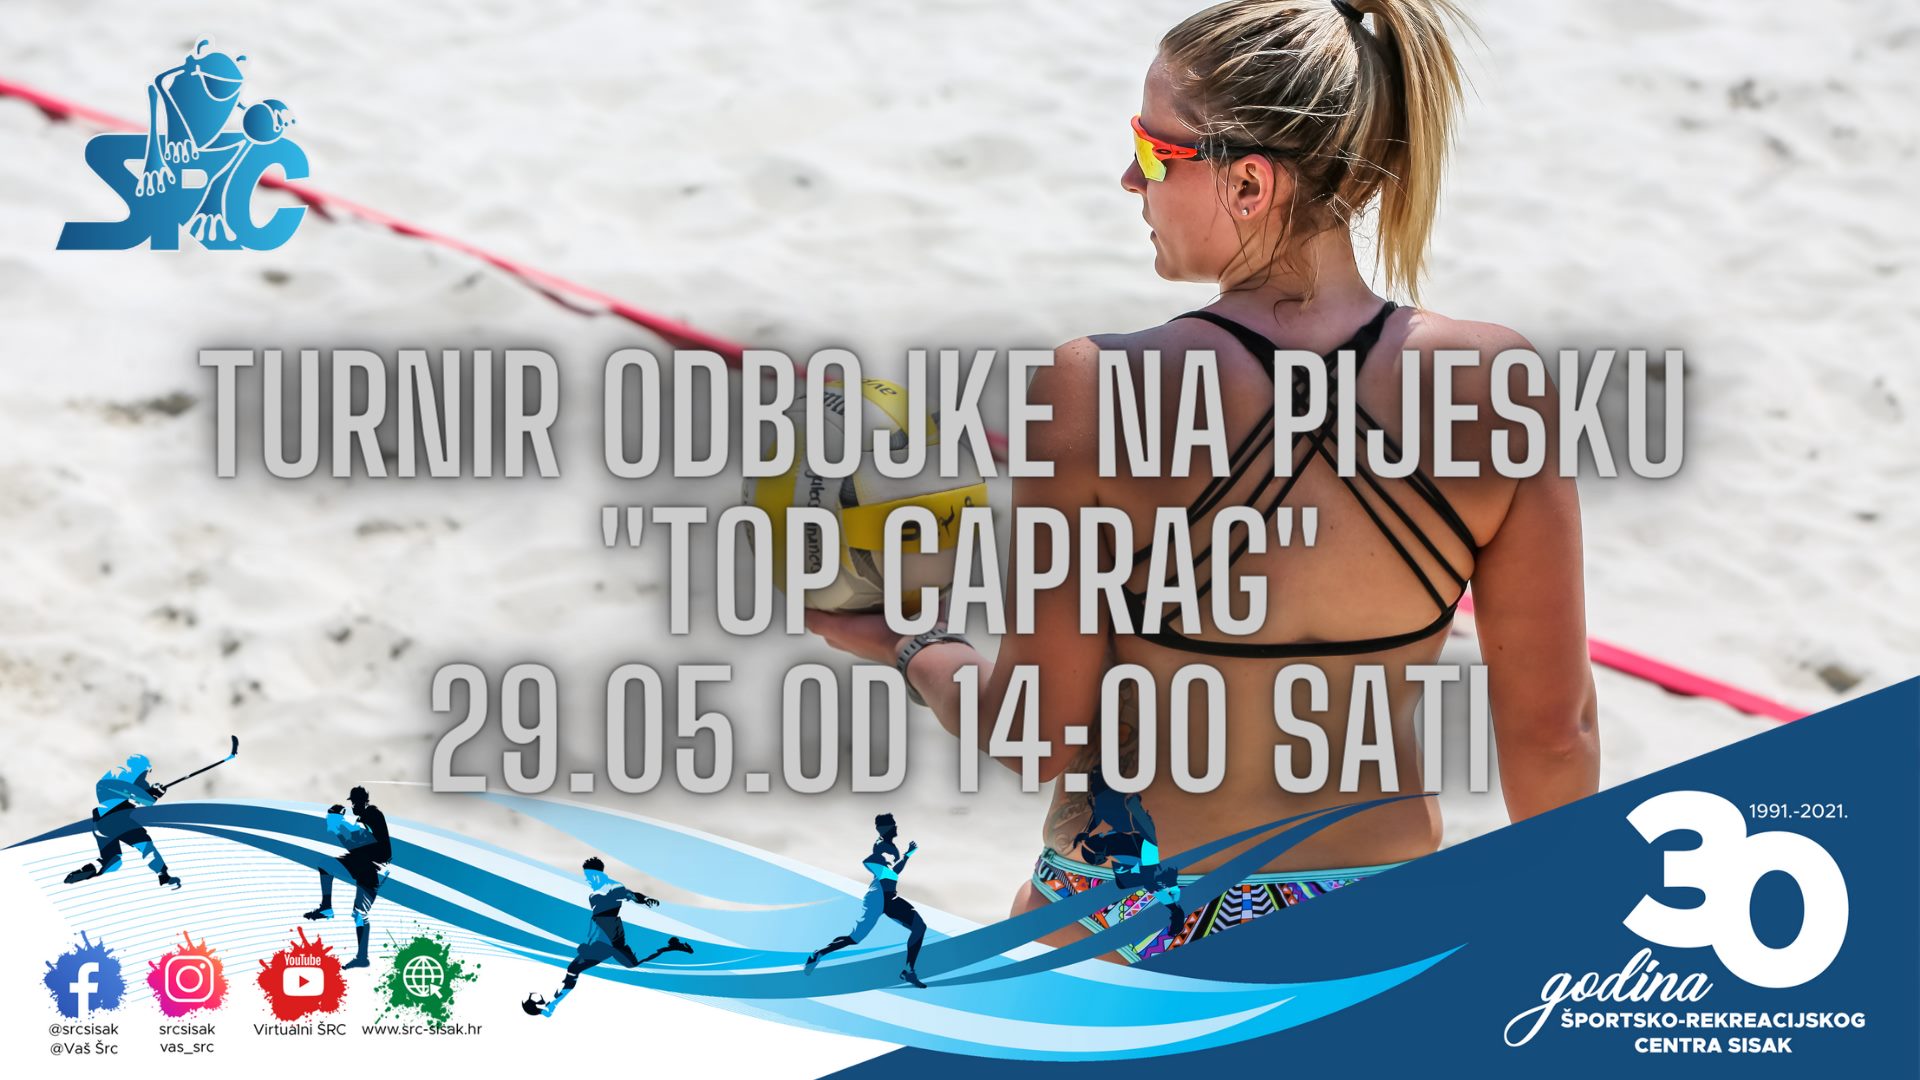 You are currently viewing Turnir odbojke na pijesku “Top Caprag”